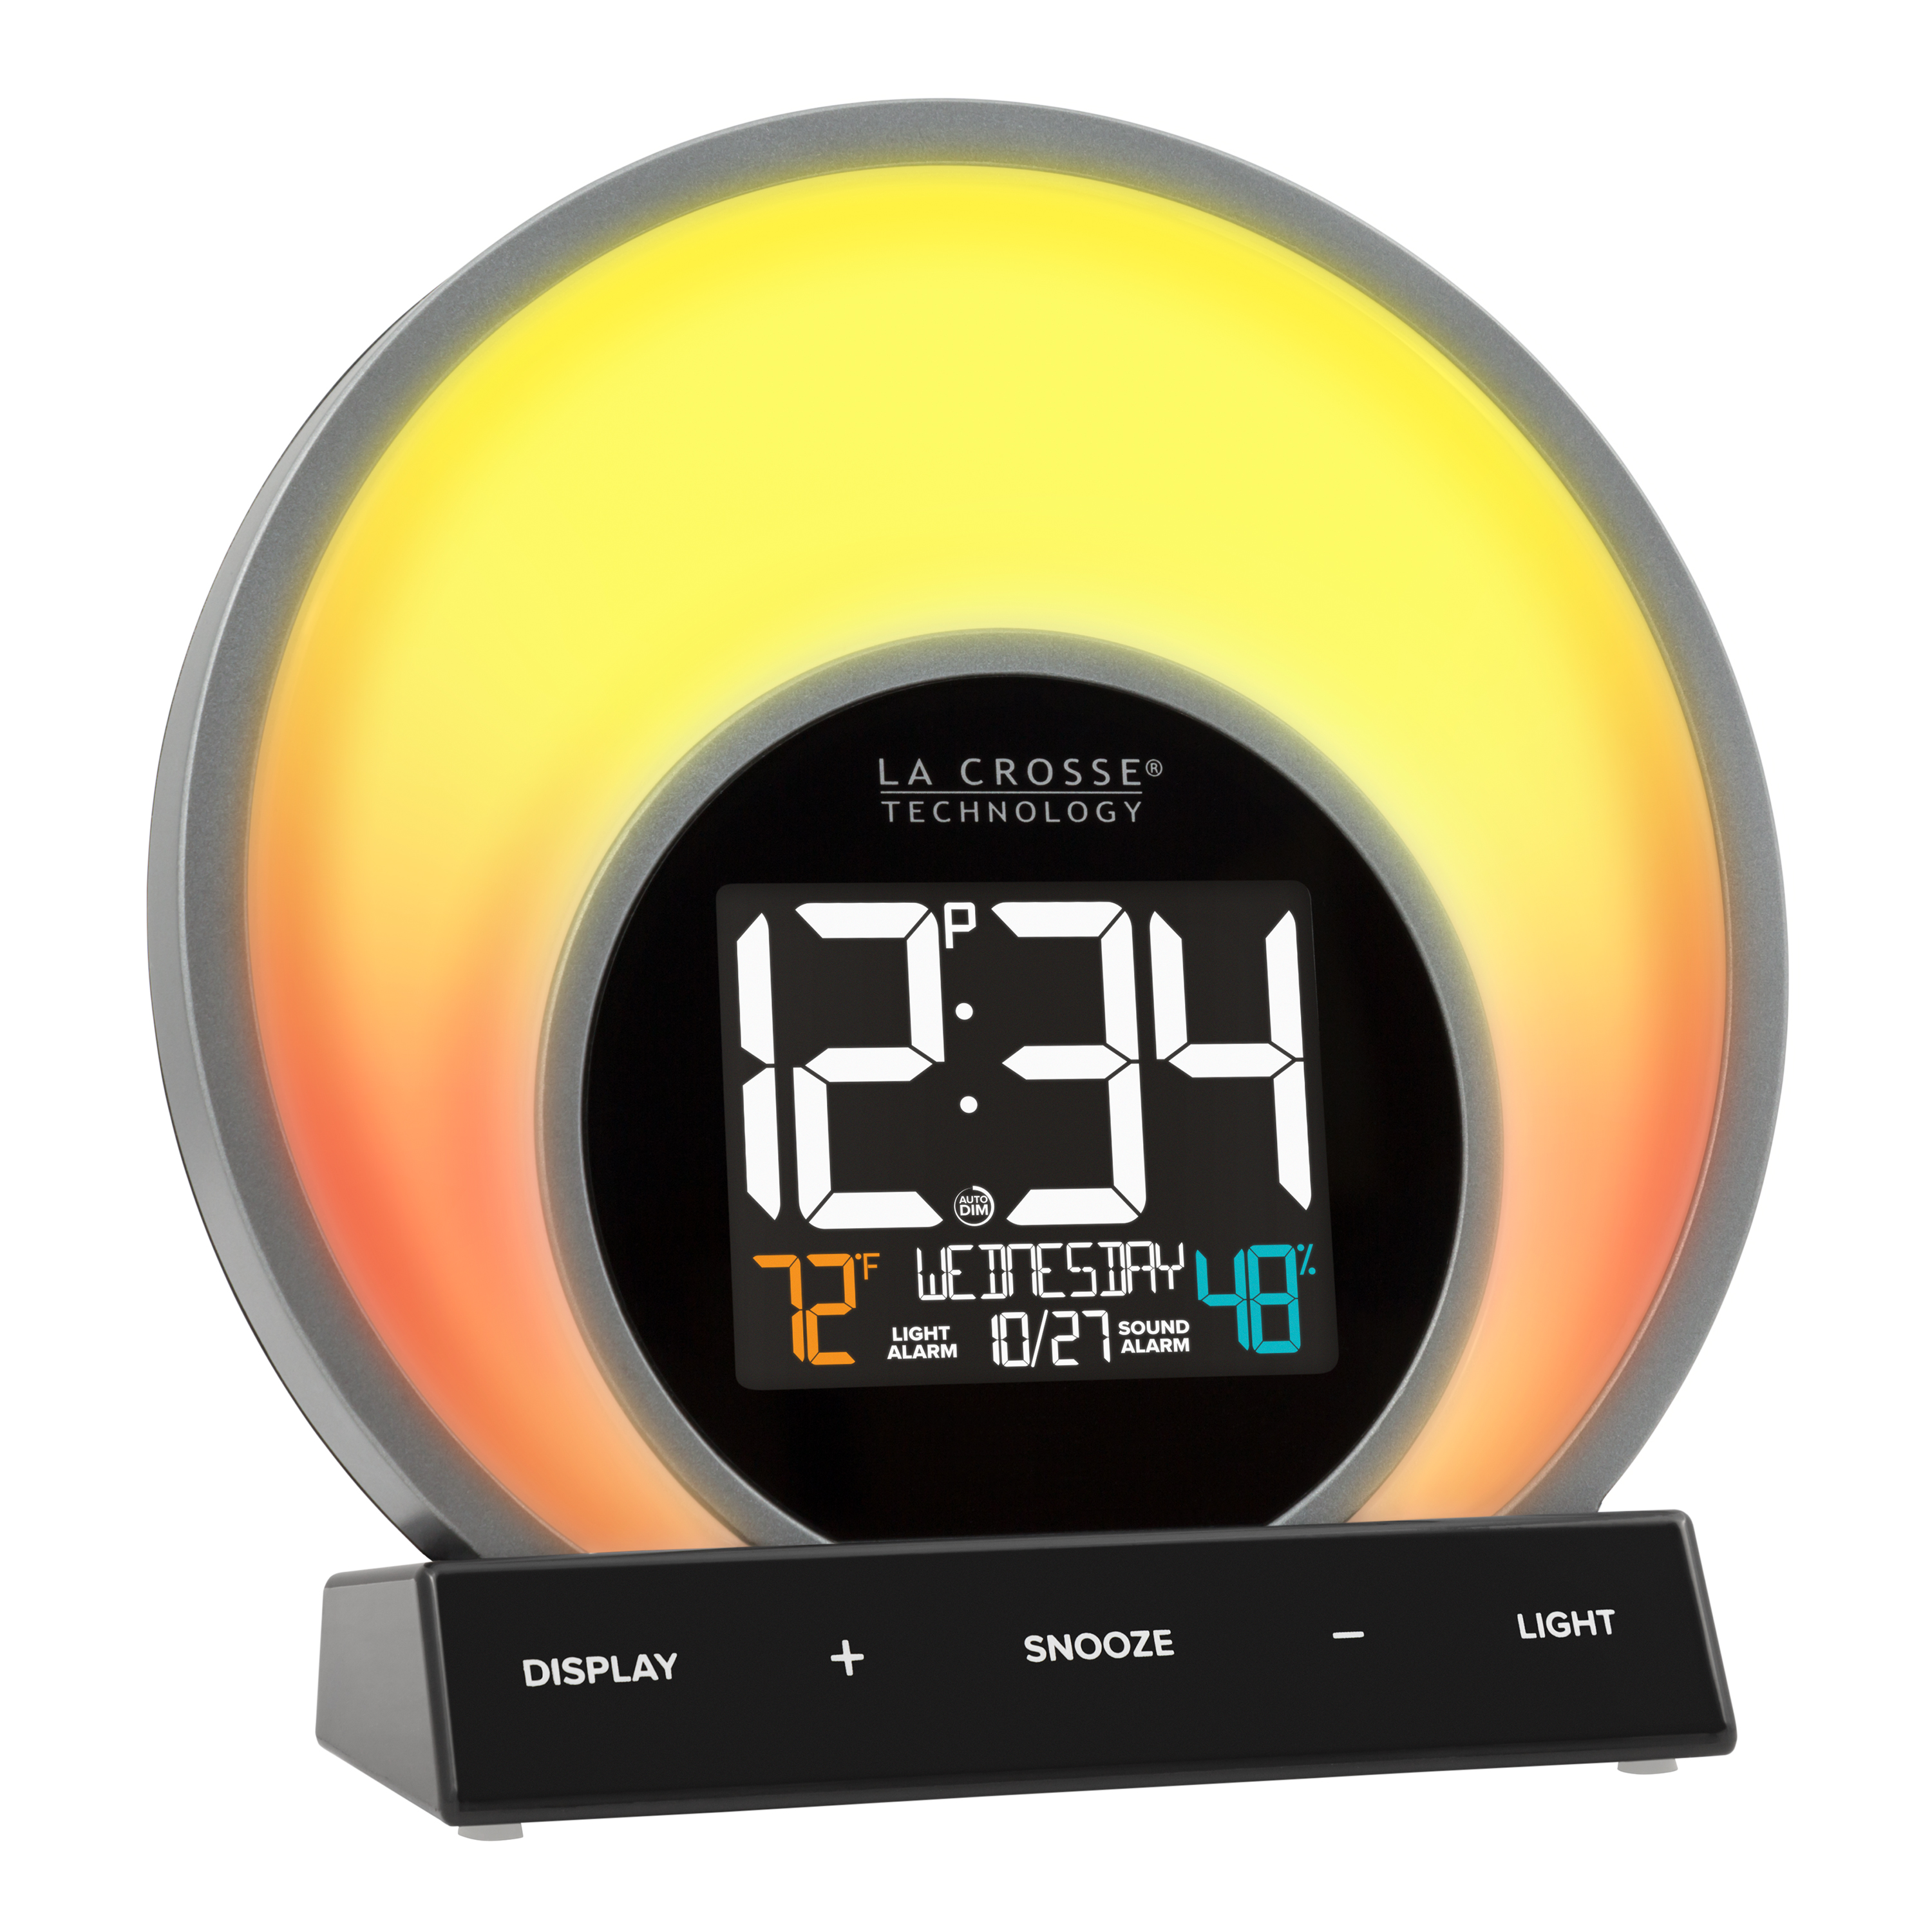 La Crosse Technology 6.81" x 2.69" Digital Soluna Sunrise & Sunset LCD Light Alarm Clock with USB port, C80994 - image 4 of 8